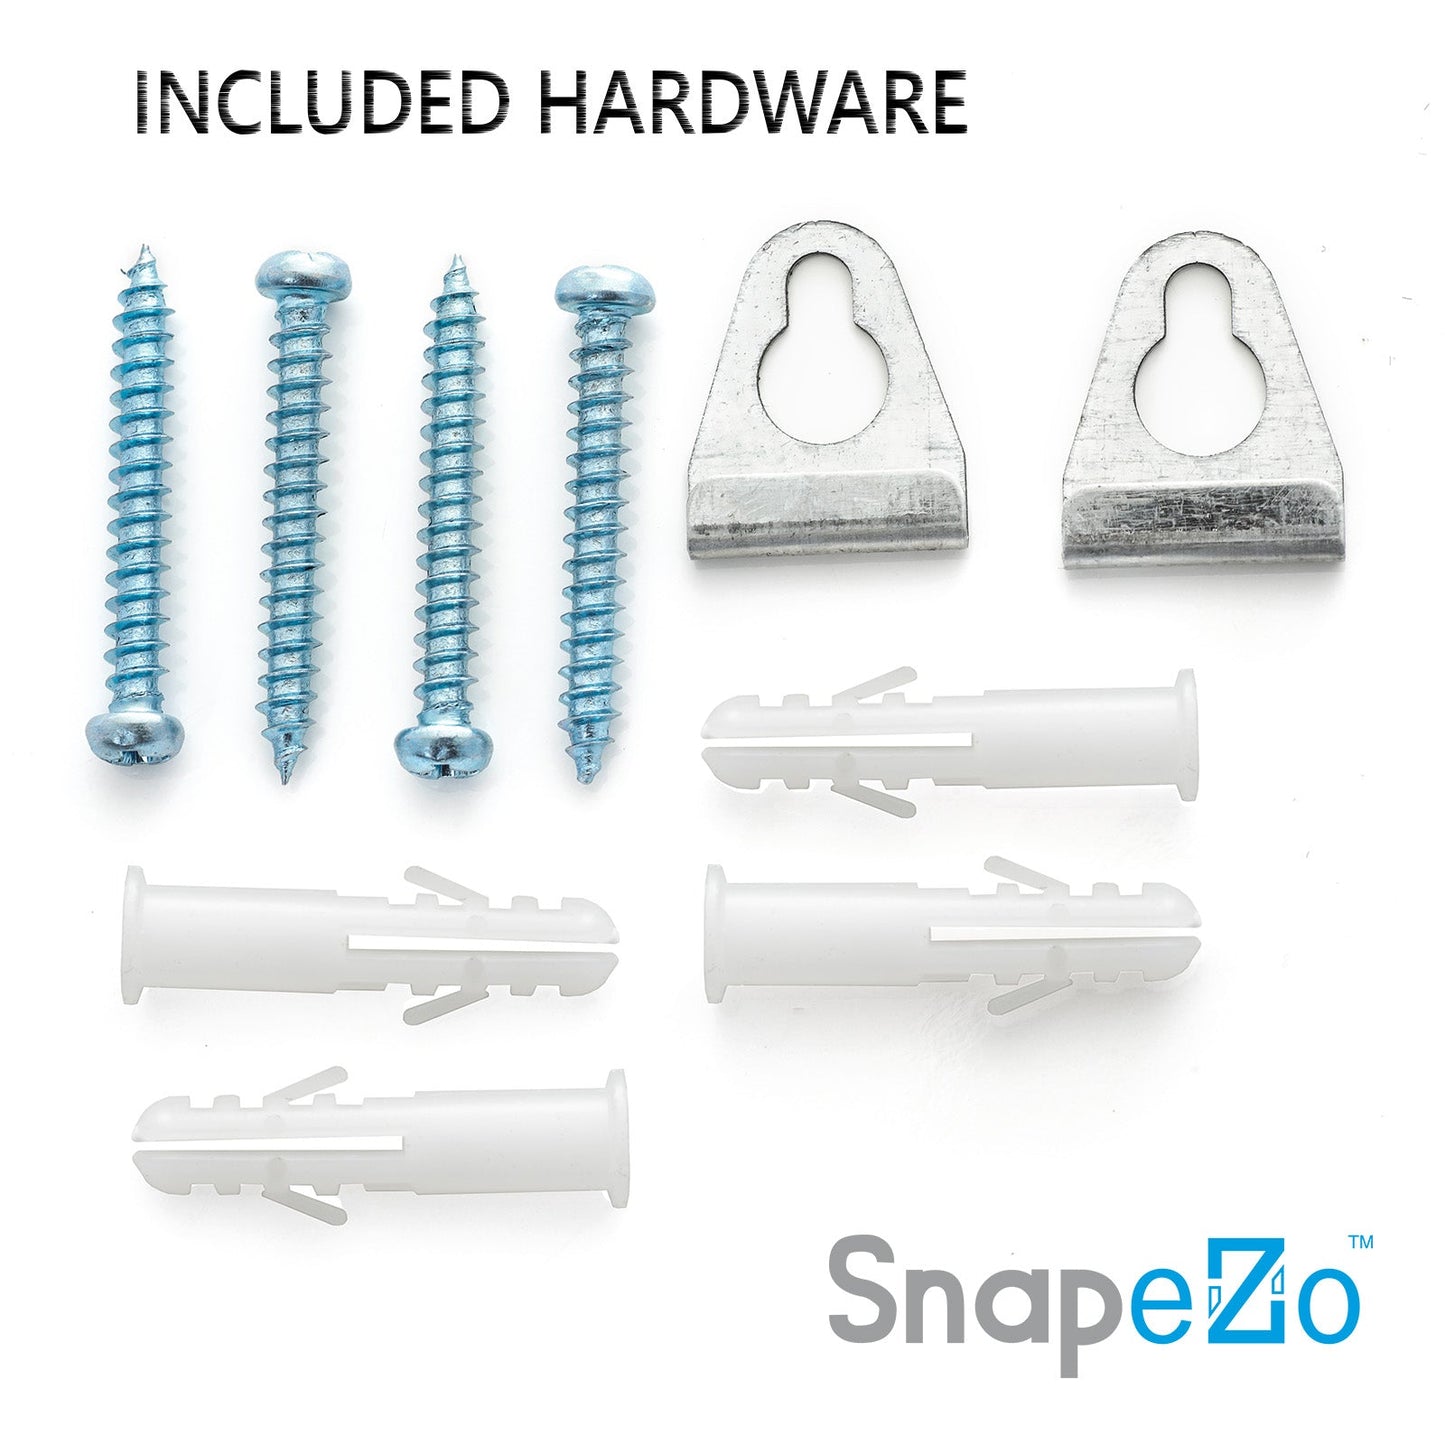 25x30 Silver SnapeZo® Snap Frame - 1.2" Profile